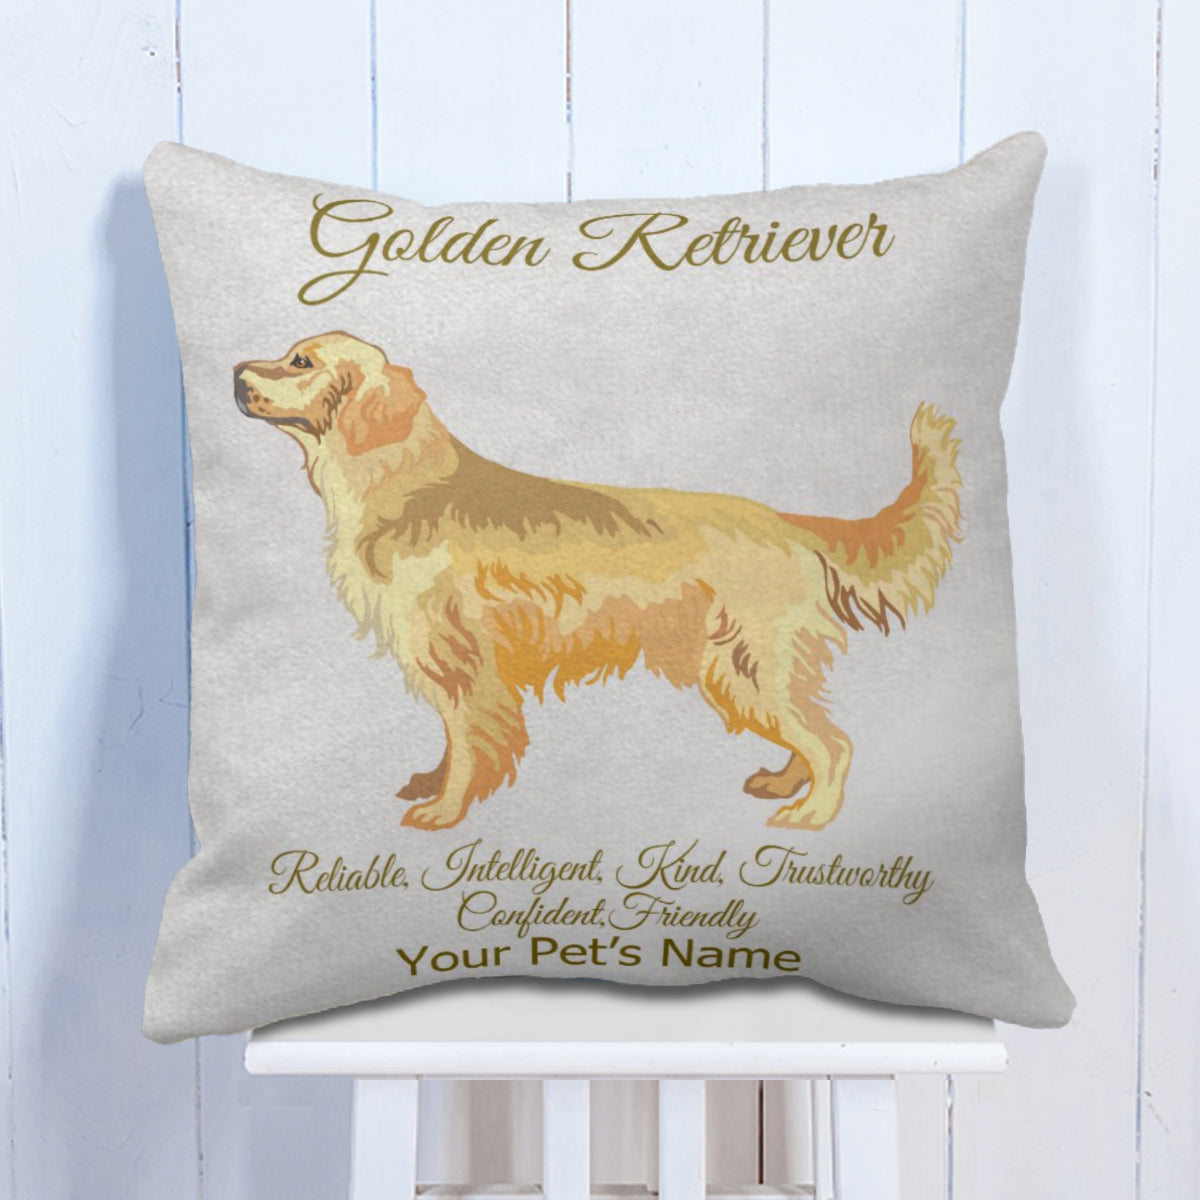 Personalised Golden Retriever Cushion